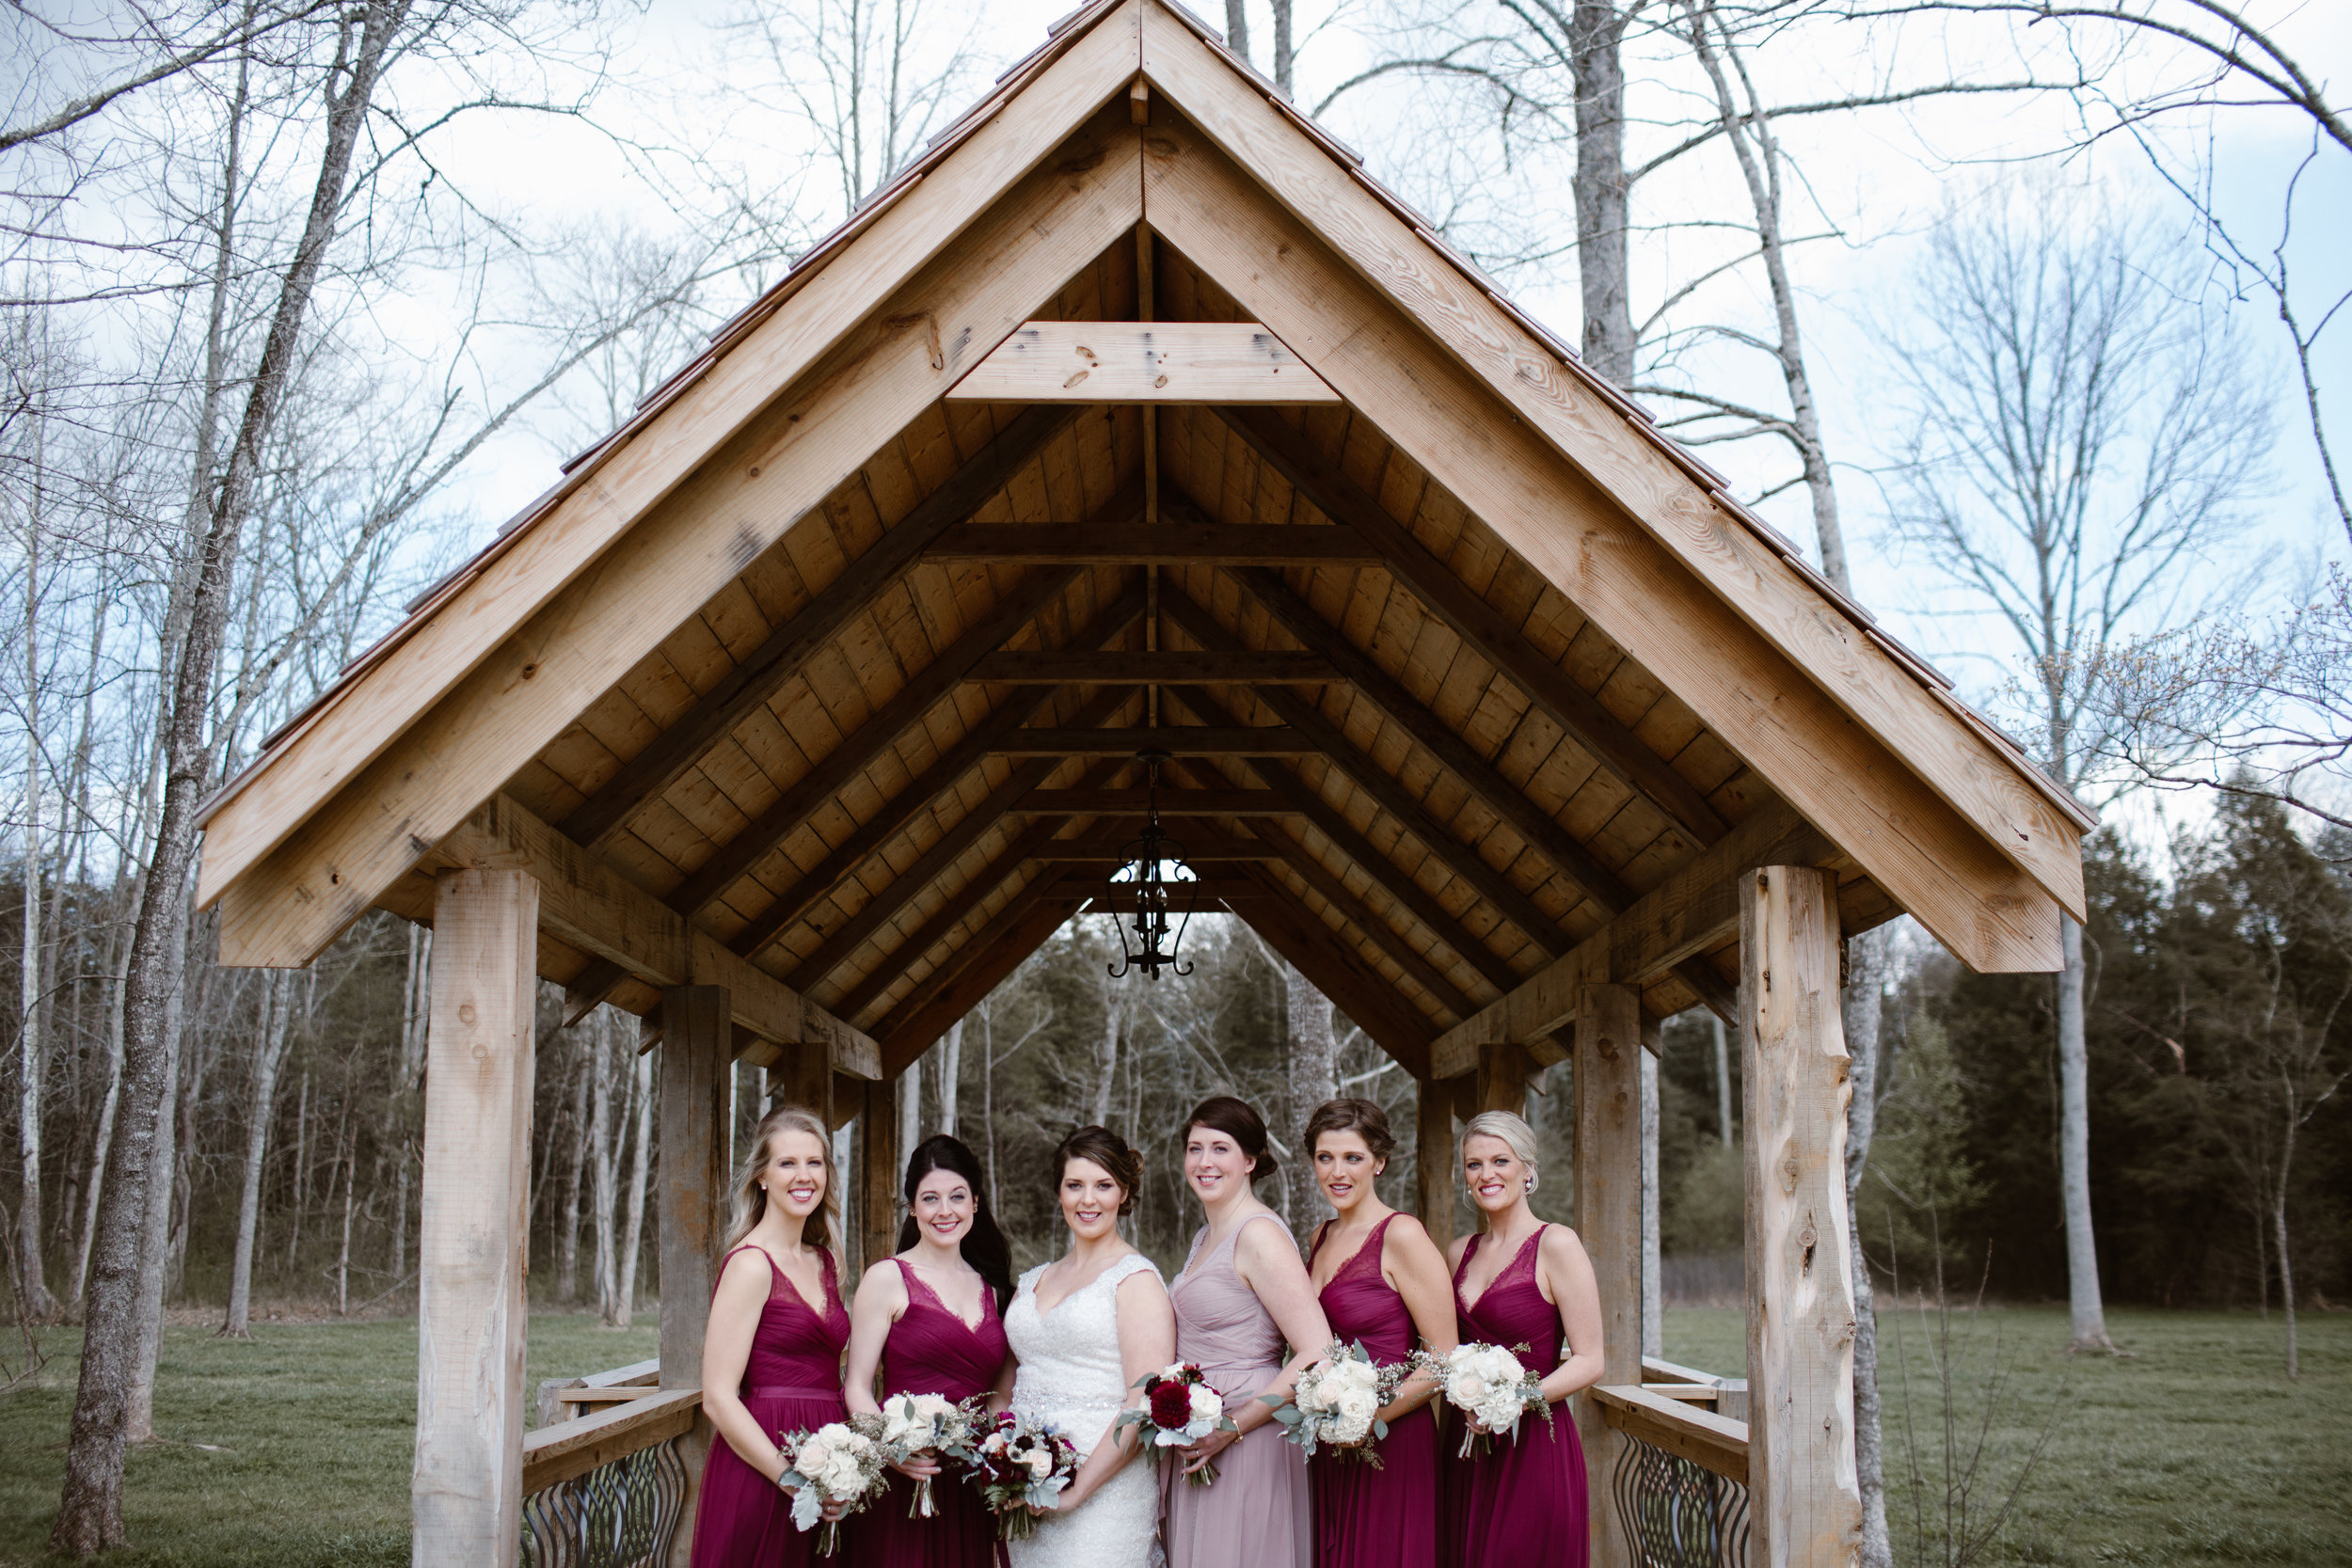 Maroon bridesmaid Dresses - A Burgundy + Bronze Ramble Creek Fall Wedding - Erin Morrison Photography